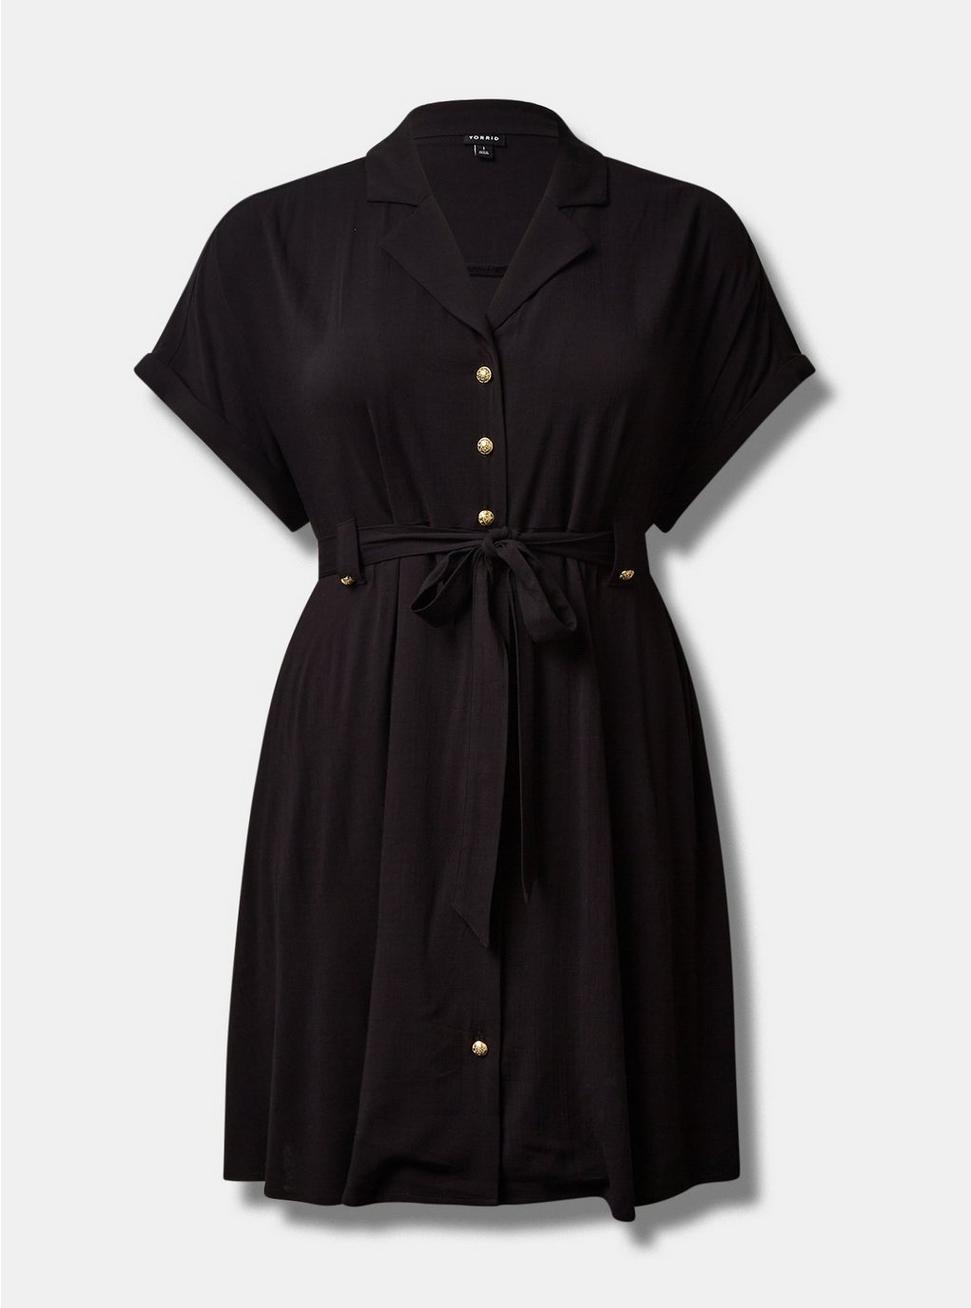 Plus Size Rayon Slub Button-Front Collared Dress, DEEP BLACK, hi-res